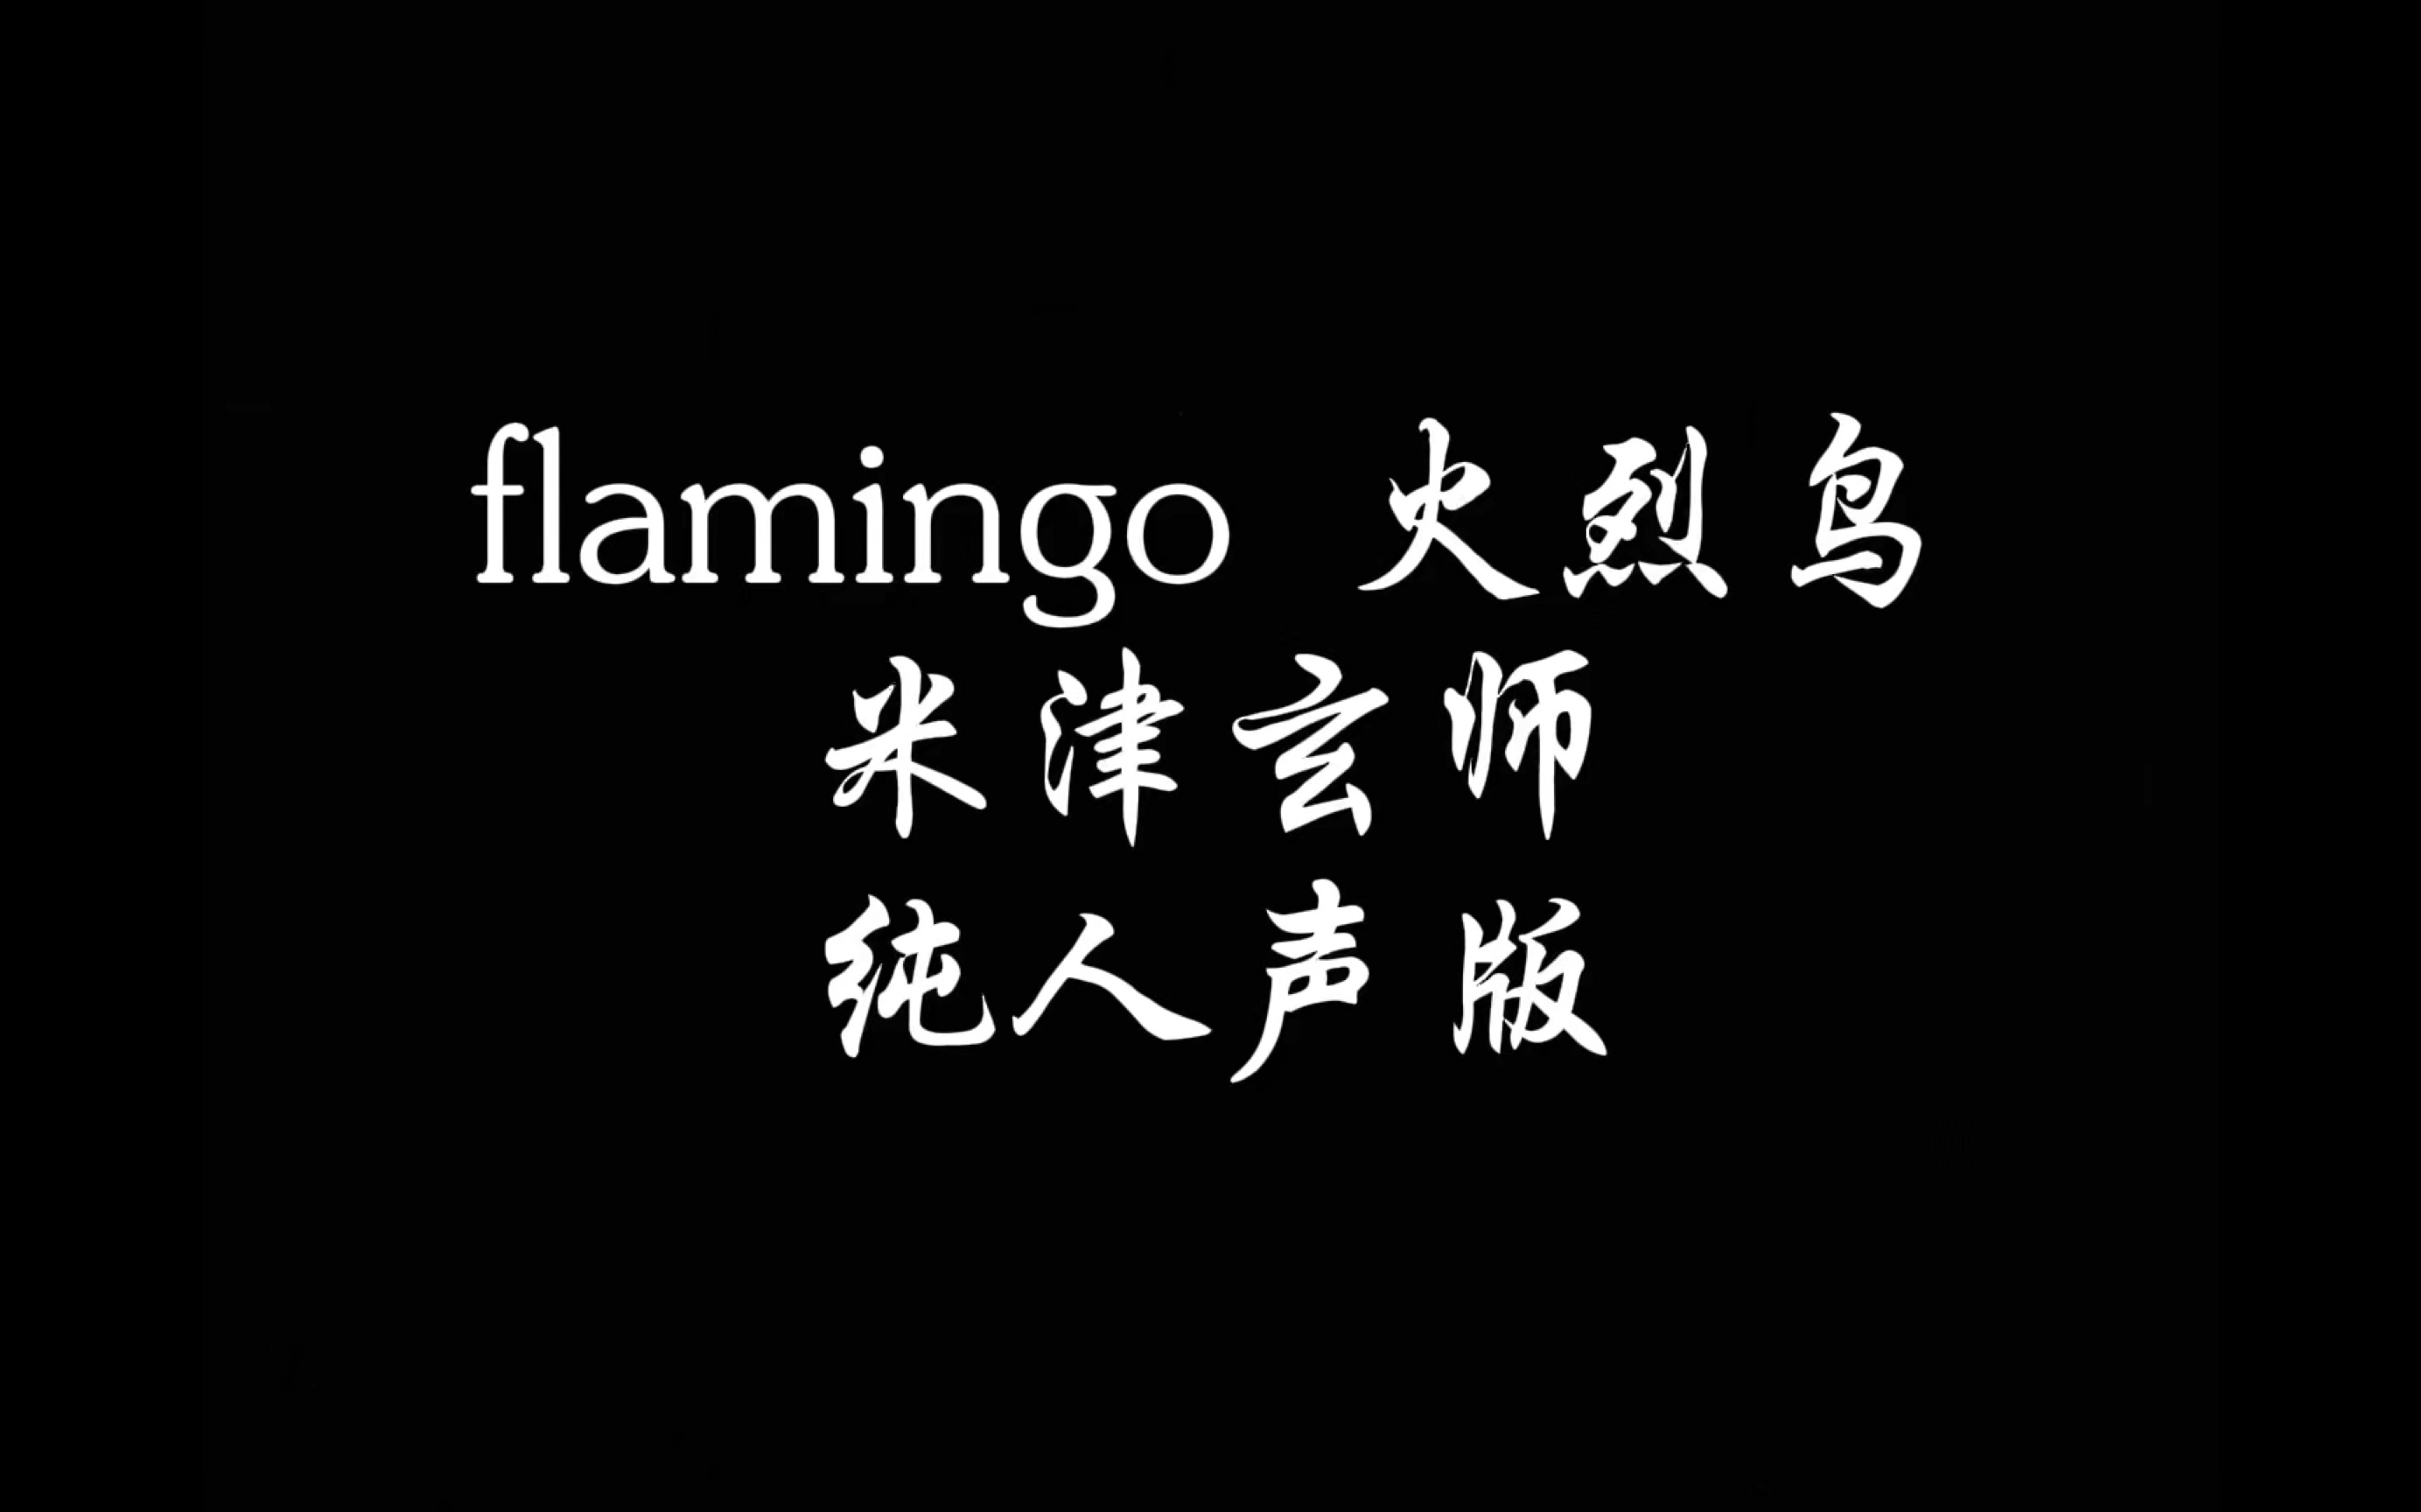 flamingo 火烈鸟 米津玄师 纯人声版